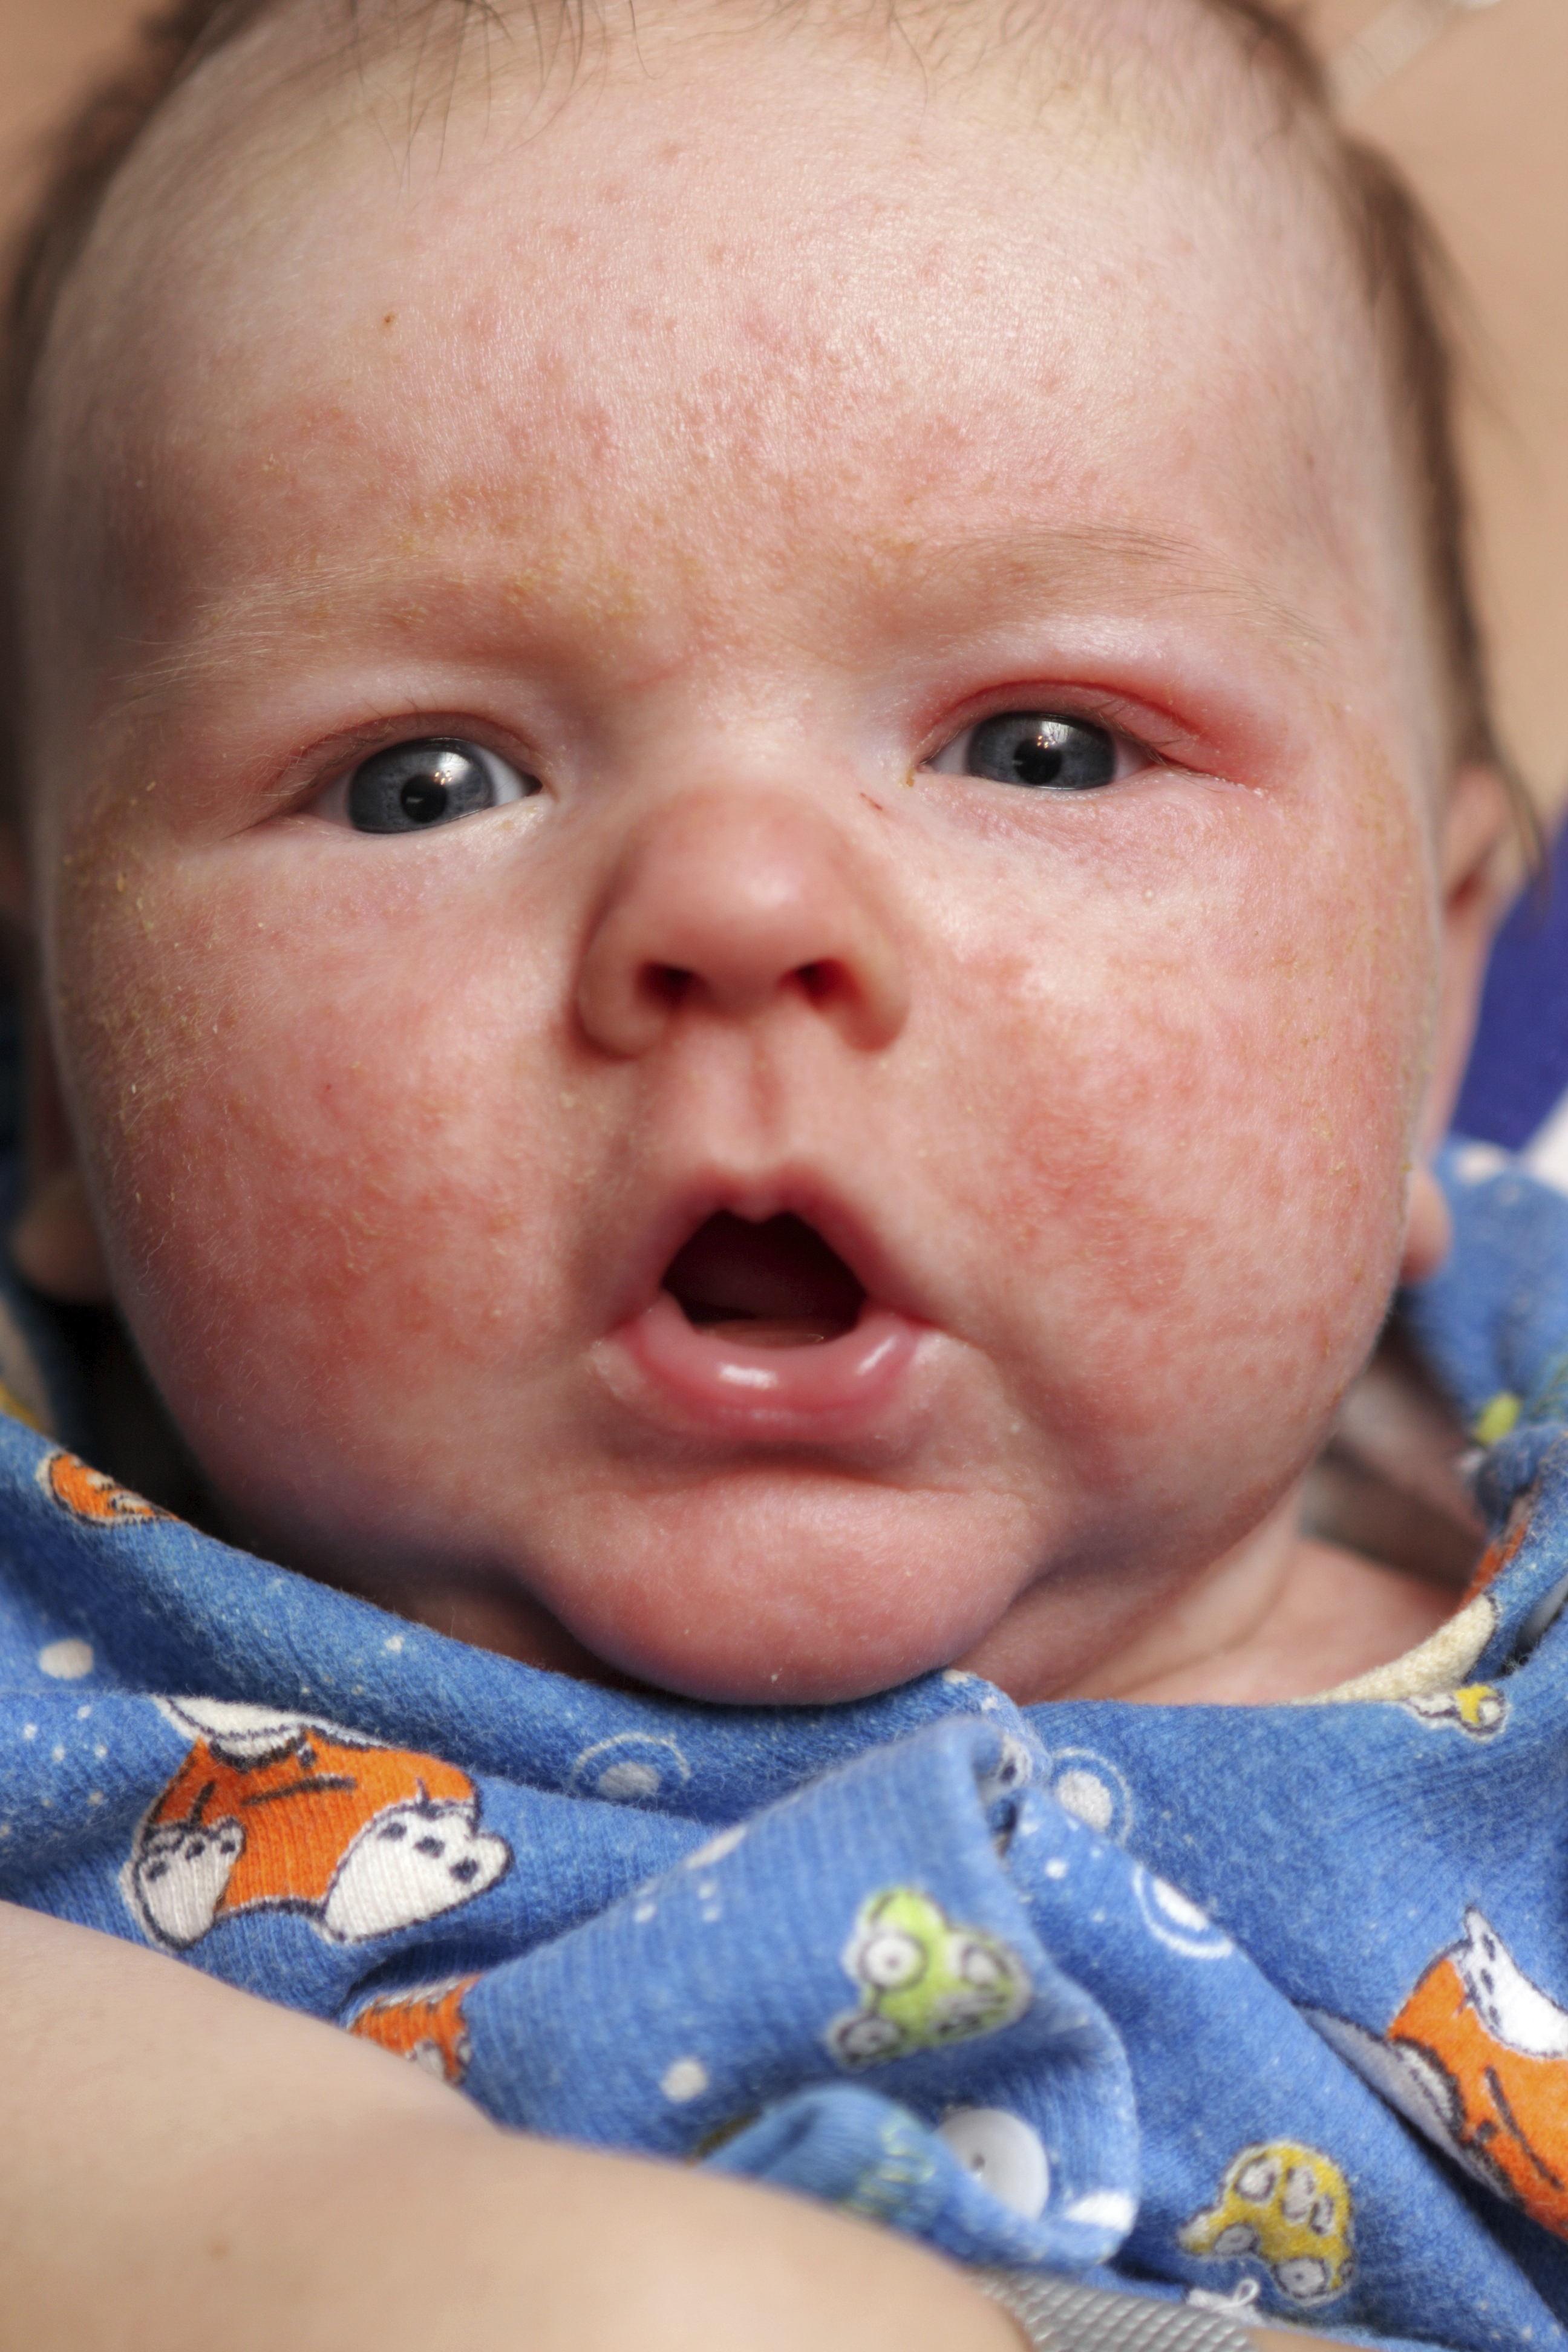 eczema treatment baby face